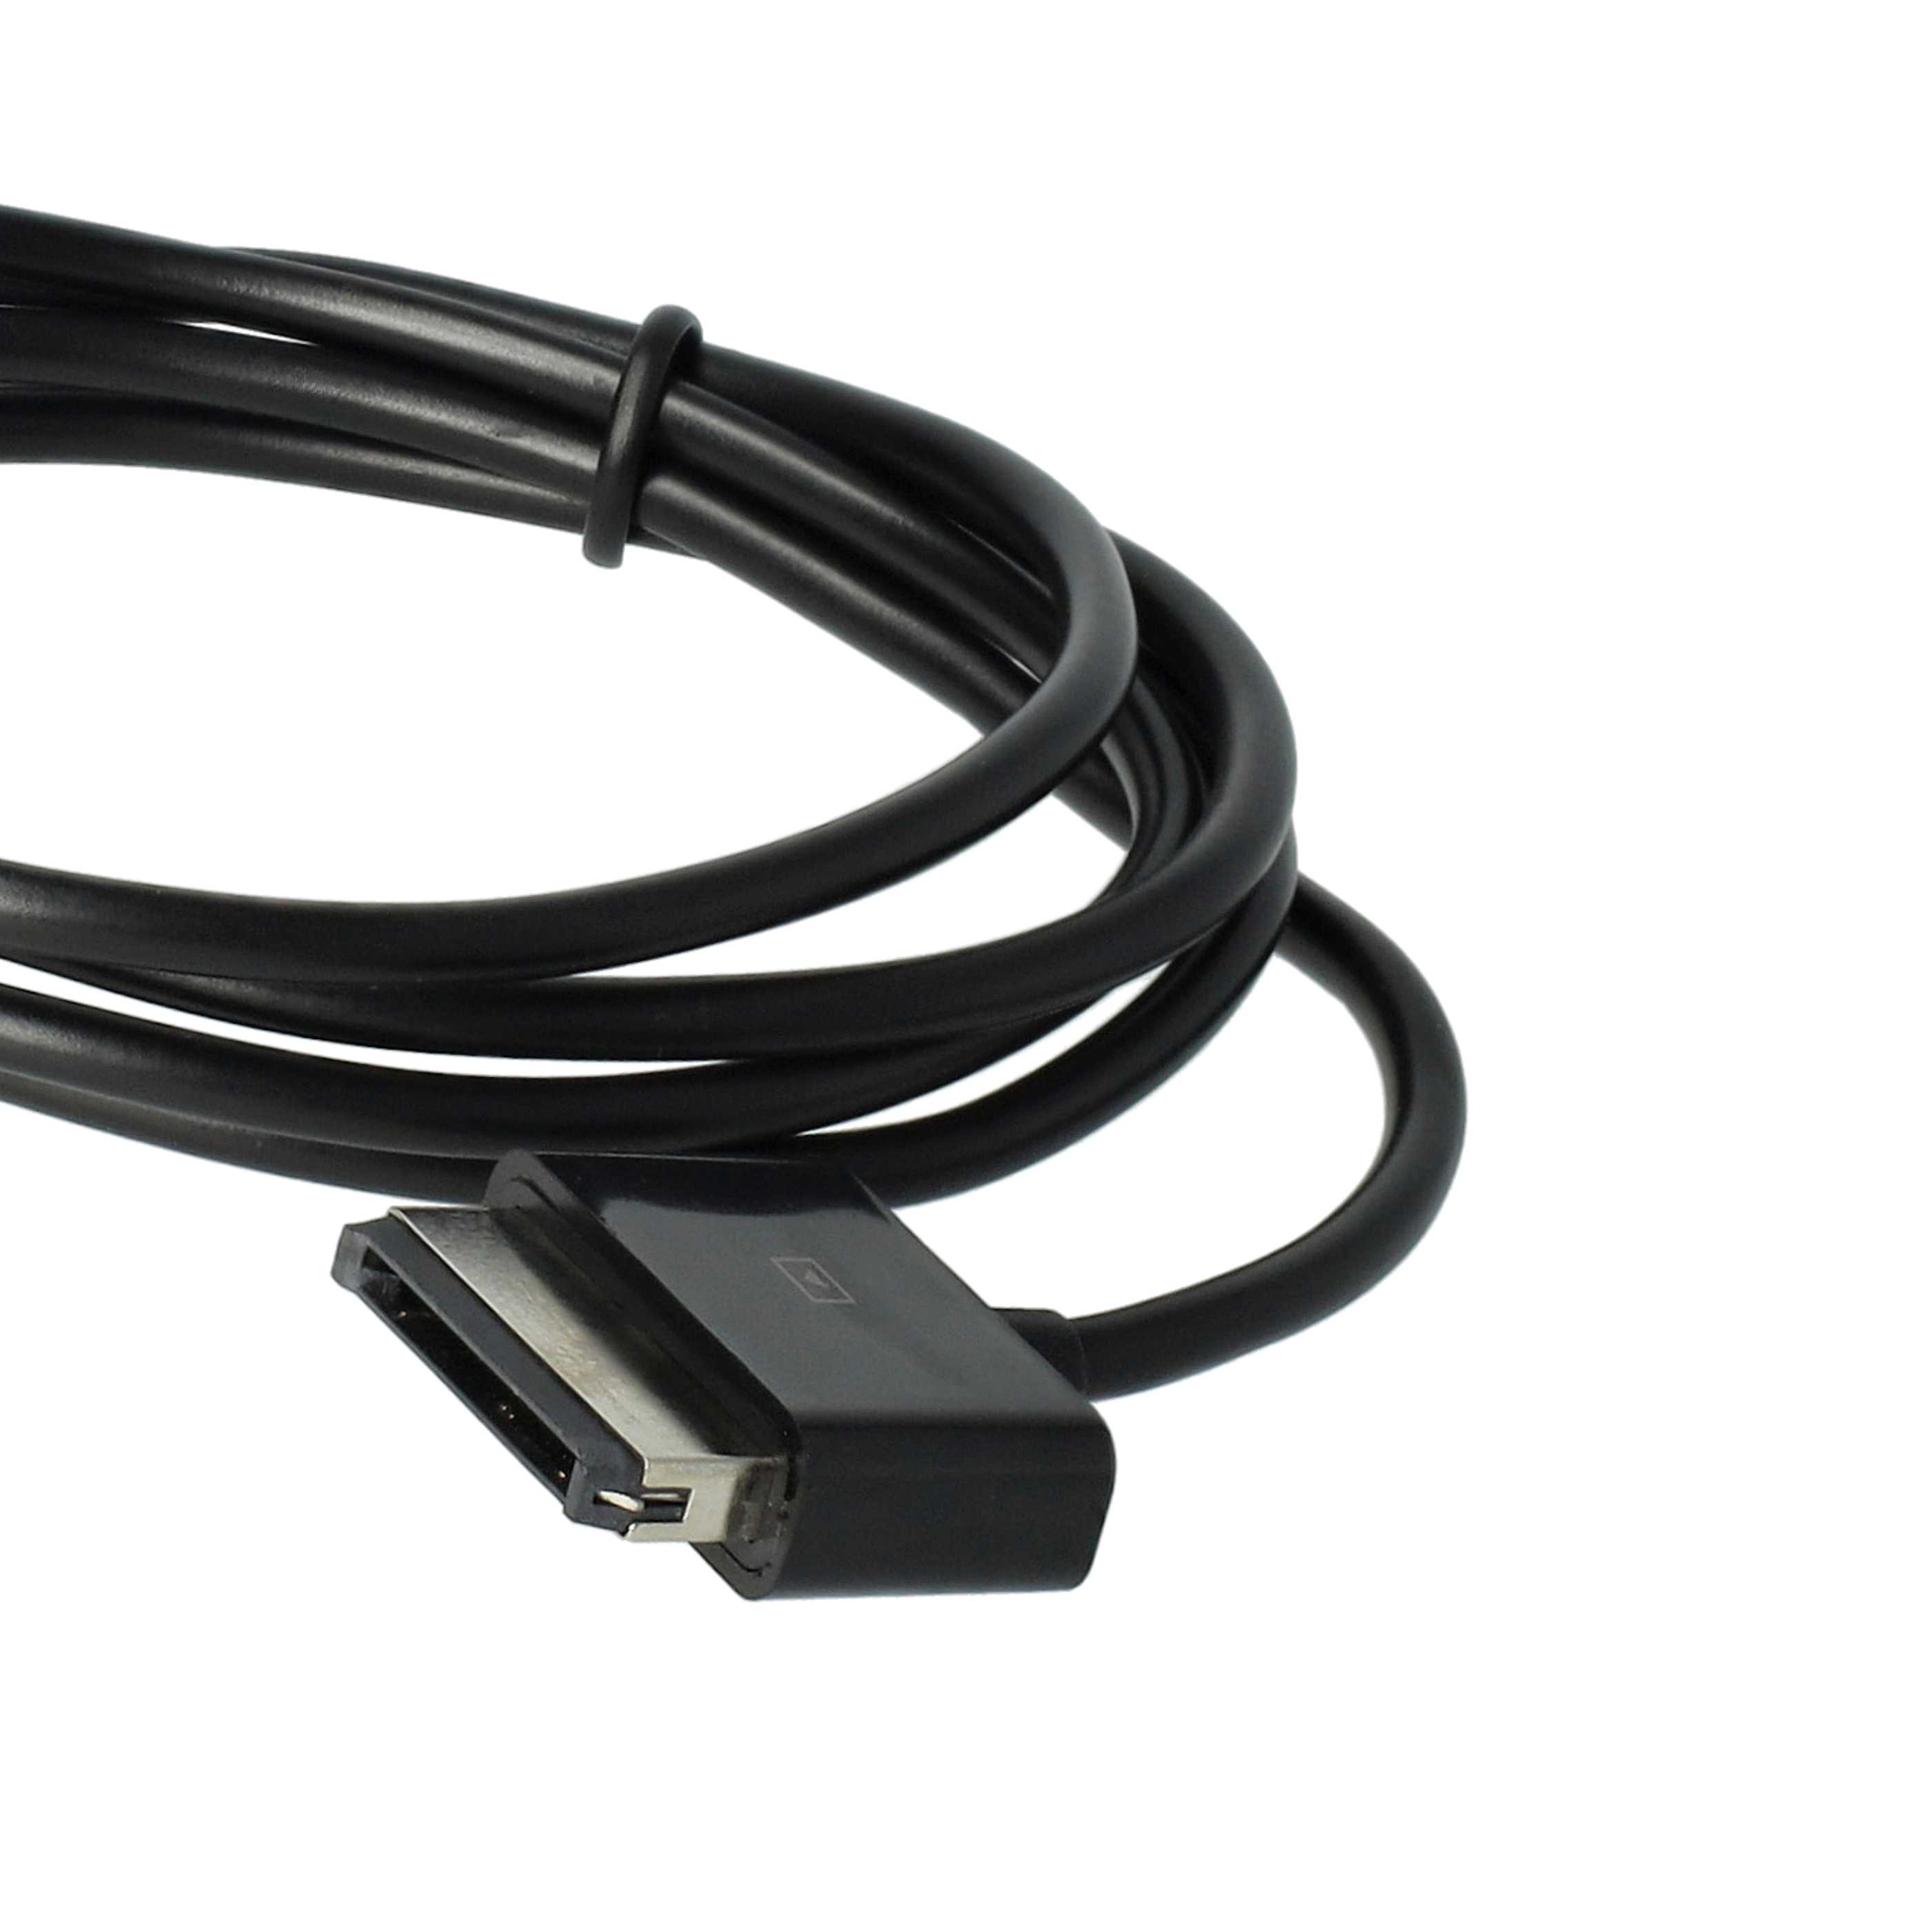 USB Datenkabel passend für Asus Eee Pad Transformer SL101 Tablet - 2in1 Ladekabel - 100cm